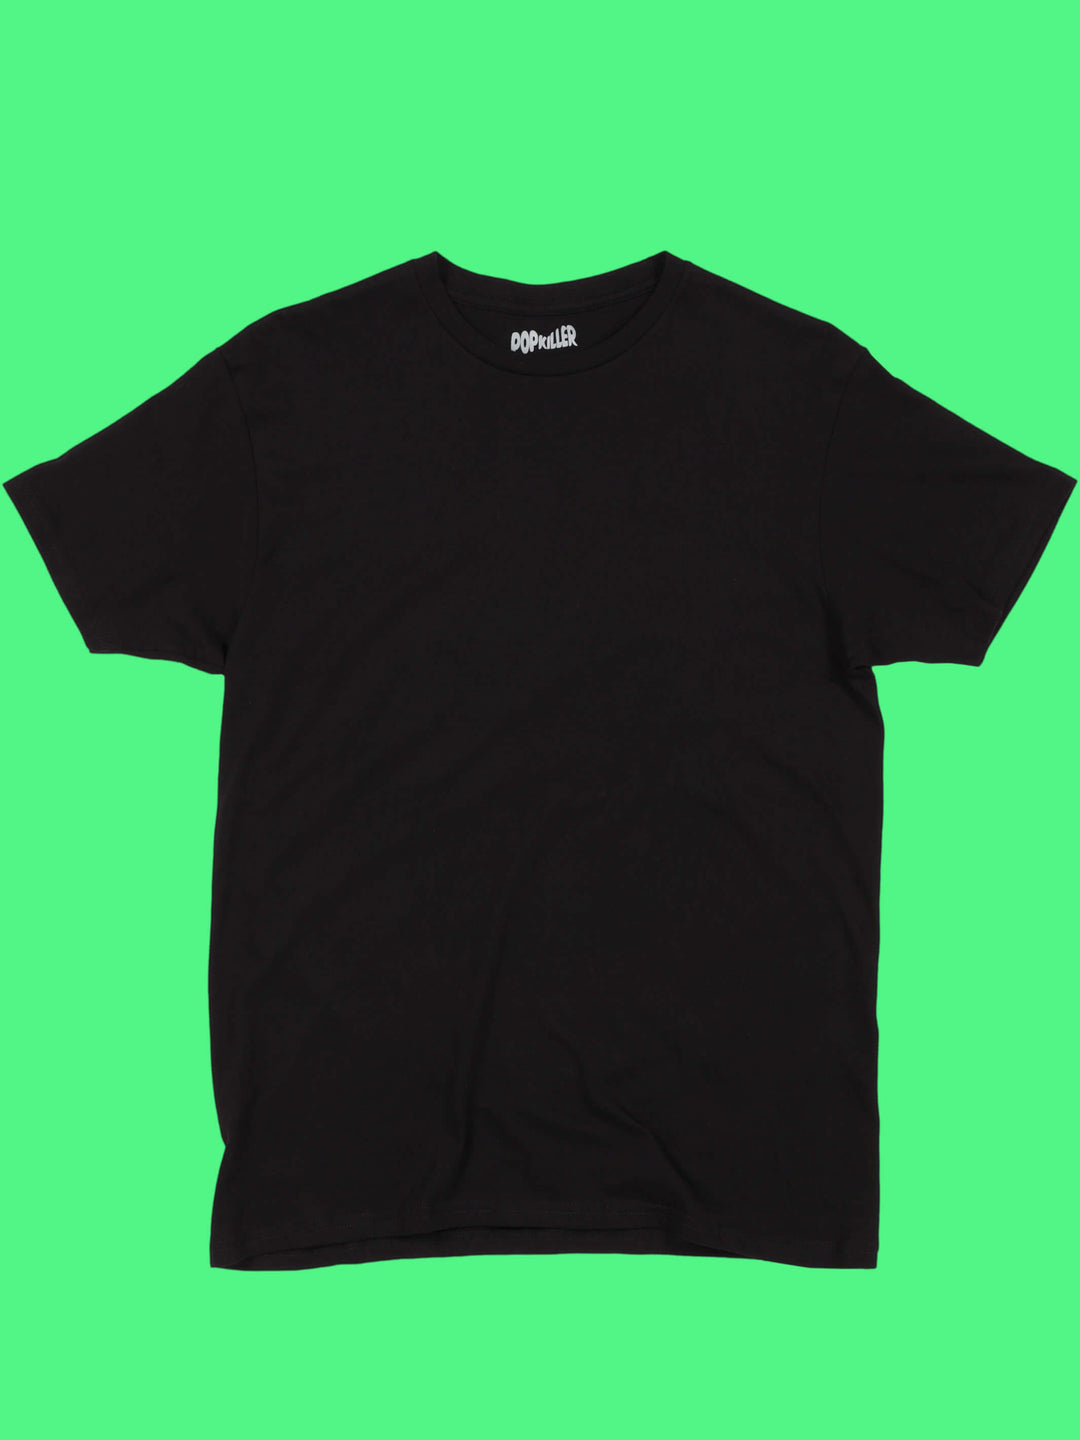 Print your own design on Popkiller's Unisex black colored t-shirt!